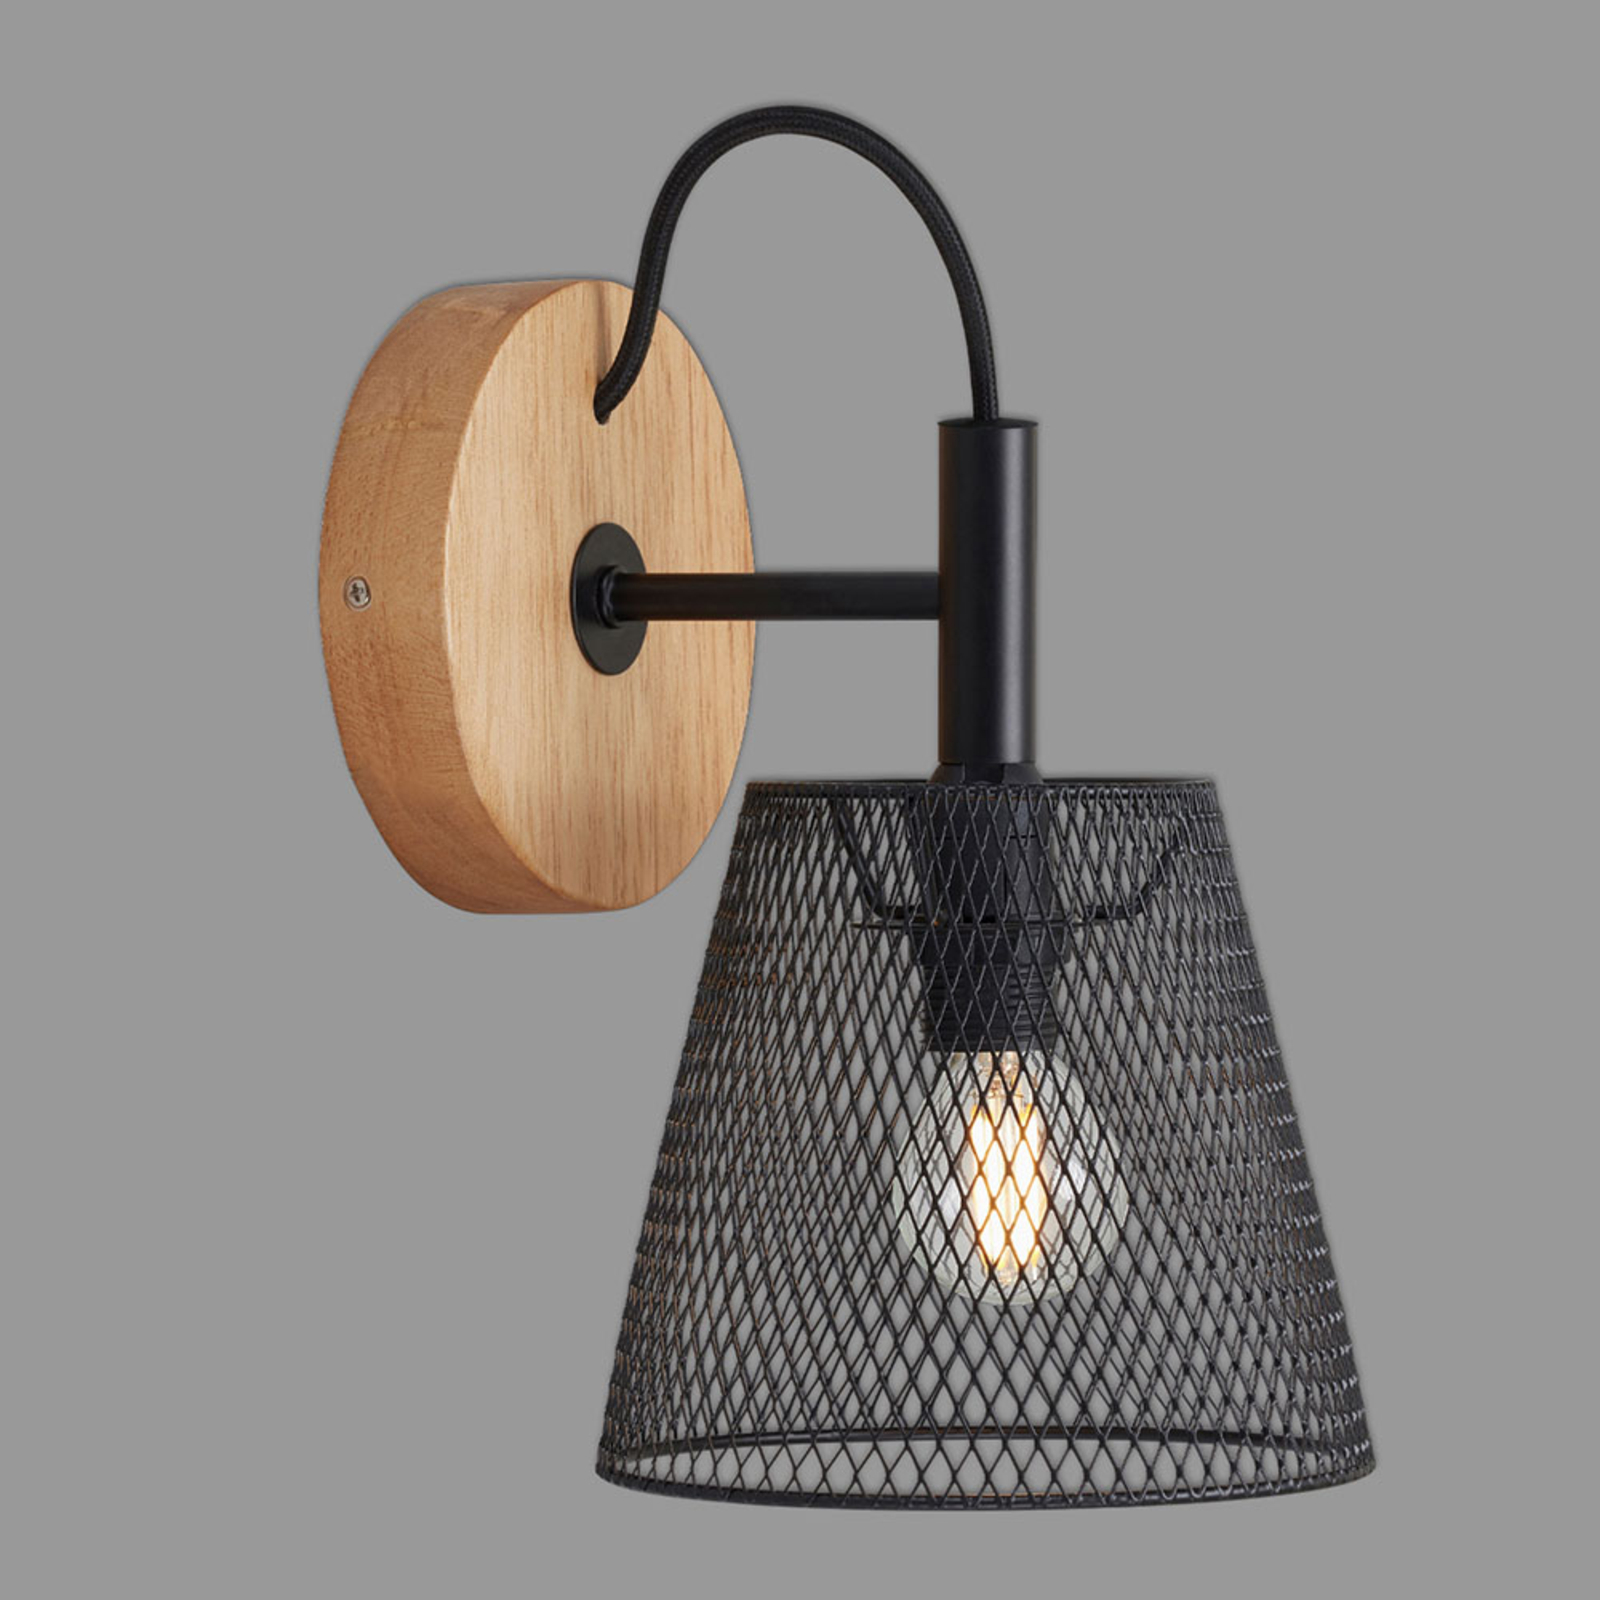 Wood & Style 2077 Vägglampa med skärm i expanderad metall